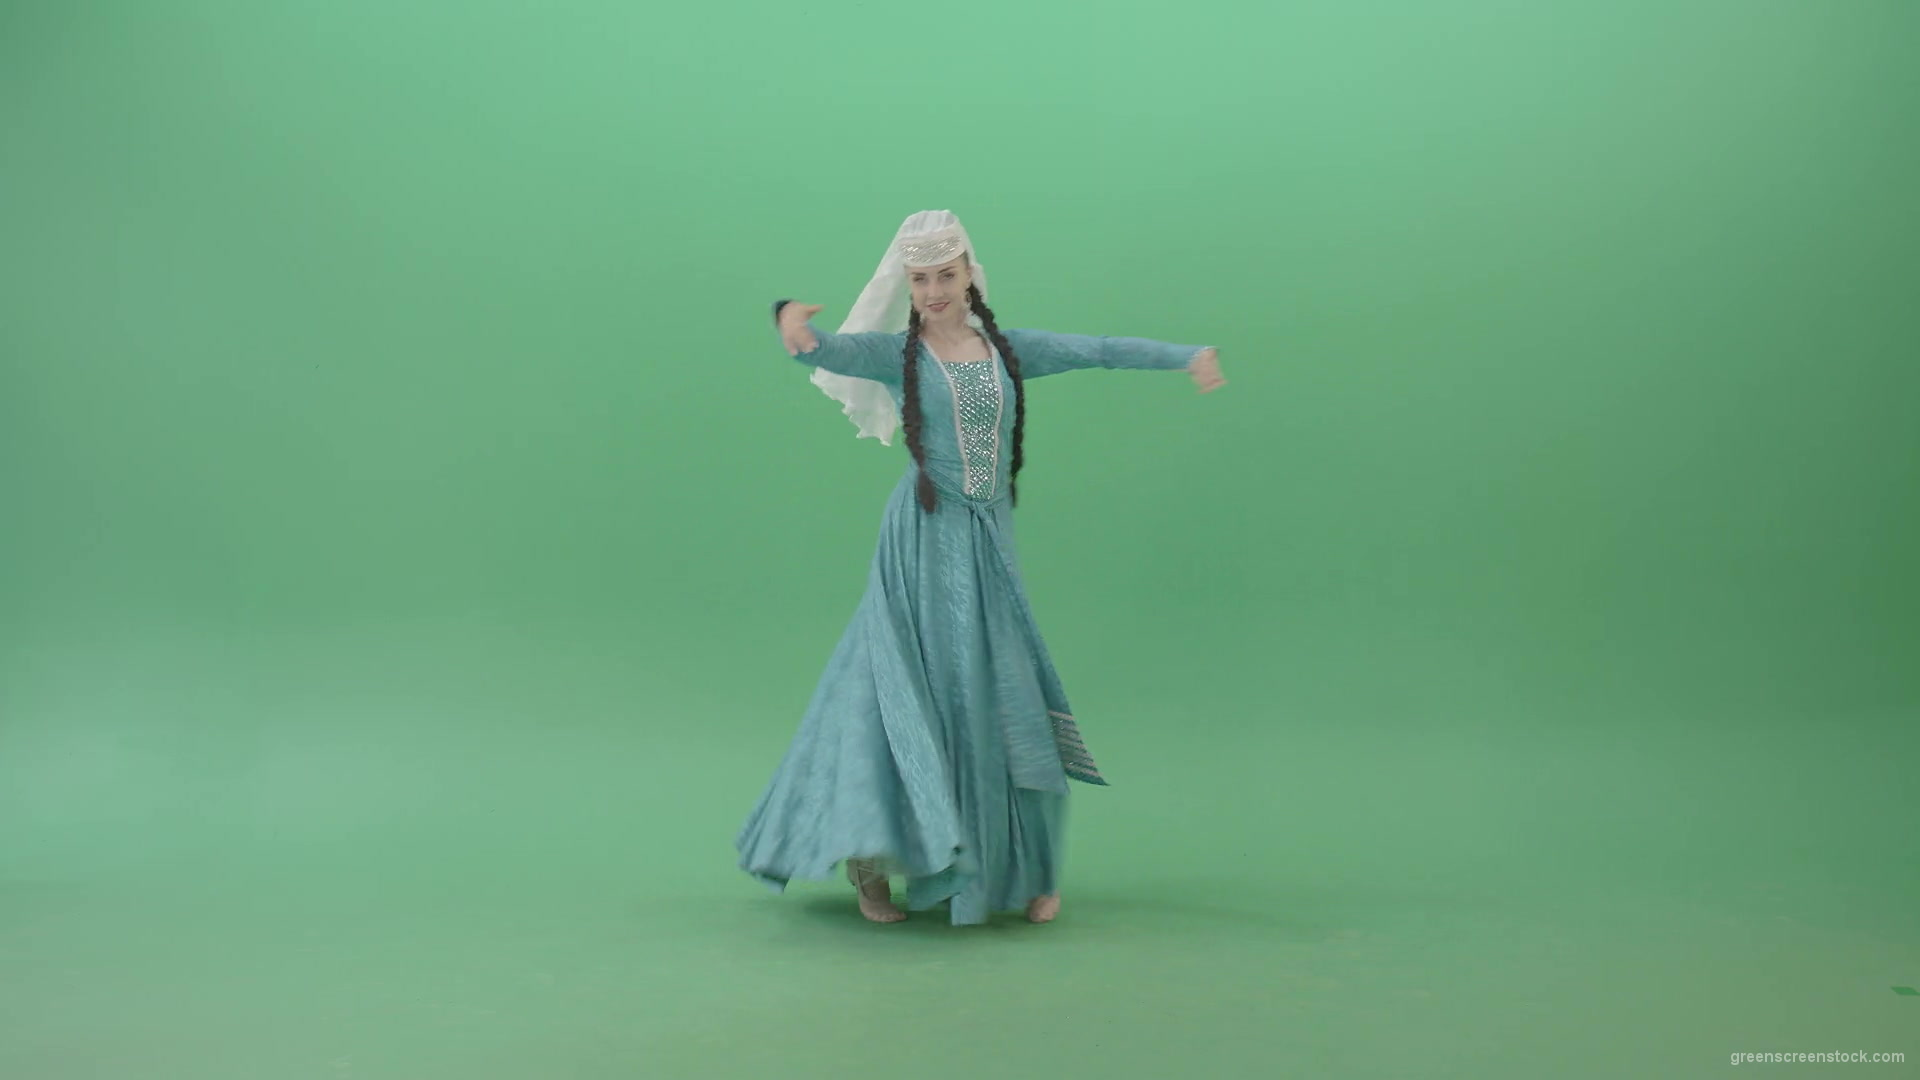 Beautiful-elegant-Woman-in-Blue-Dress-dancing-Perkhuli-oriental-dance-on-Green-Screen-4K-Video-Clip-1920_009 Green Screen Stock